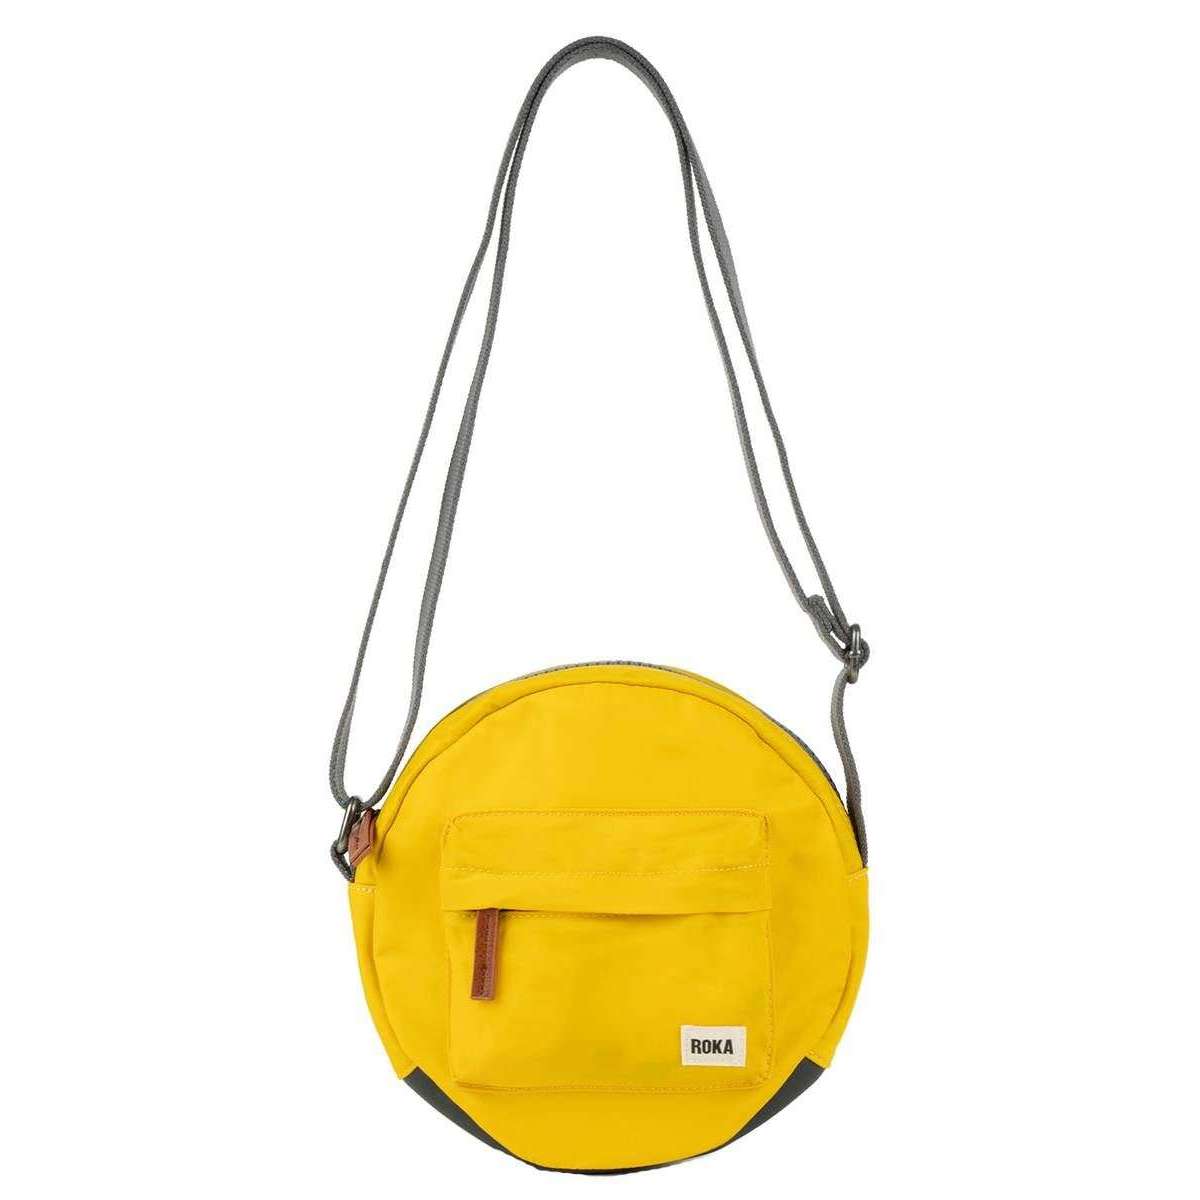 Roka Paddington B Small Sustainable Nylon Crossbody Bag - Mustard Yellow